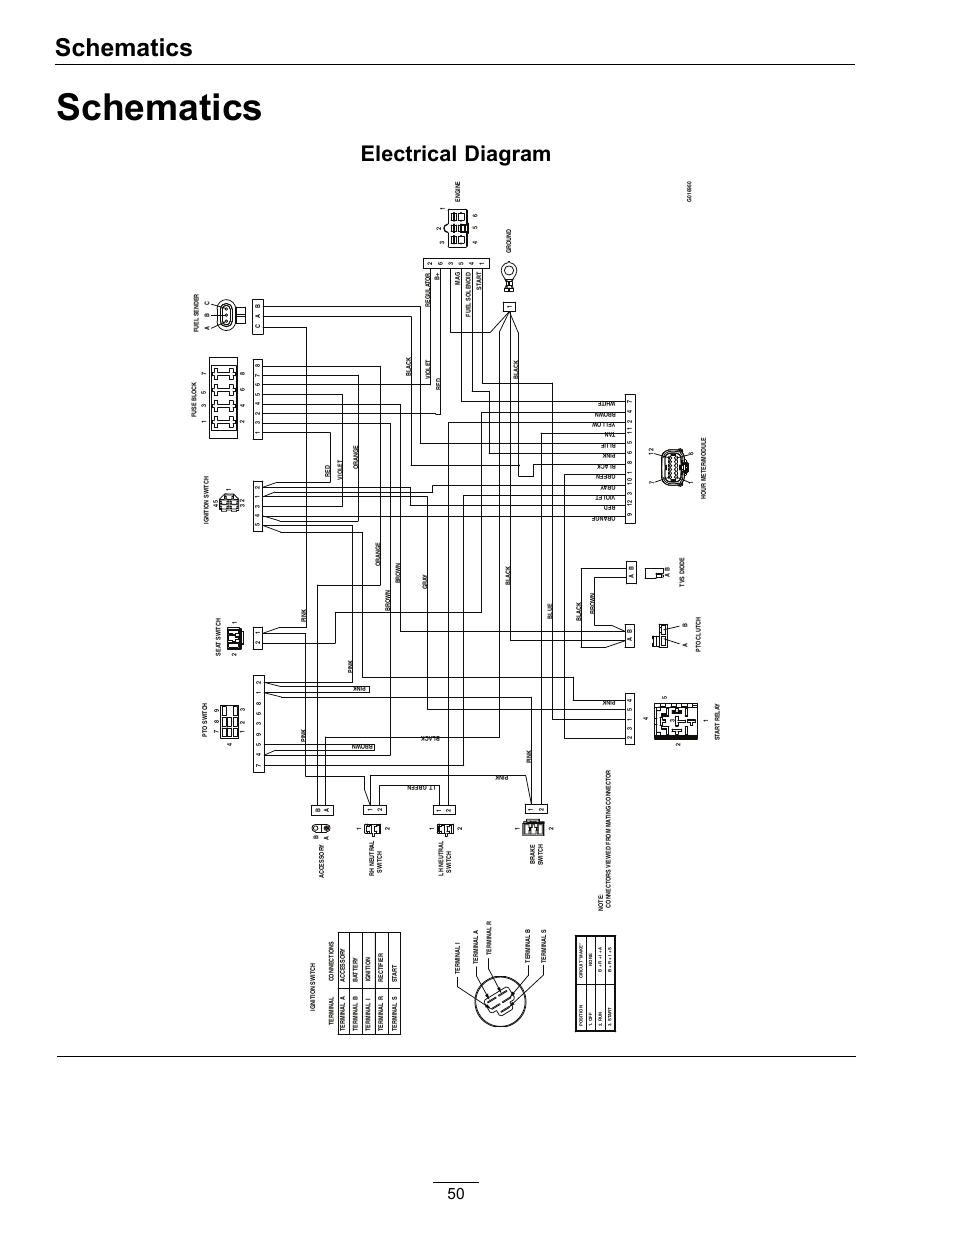 reprap wiring diagram